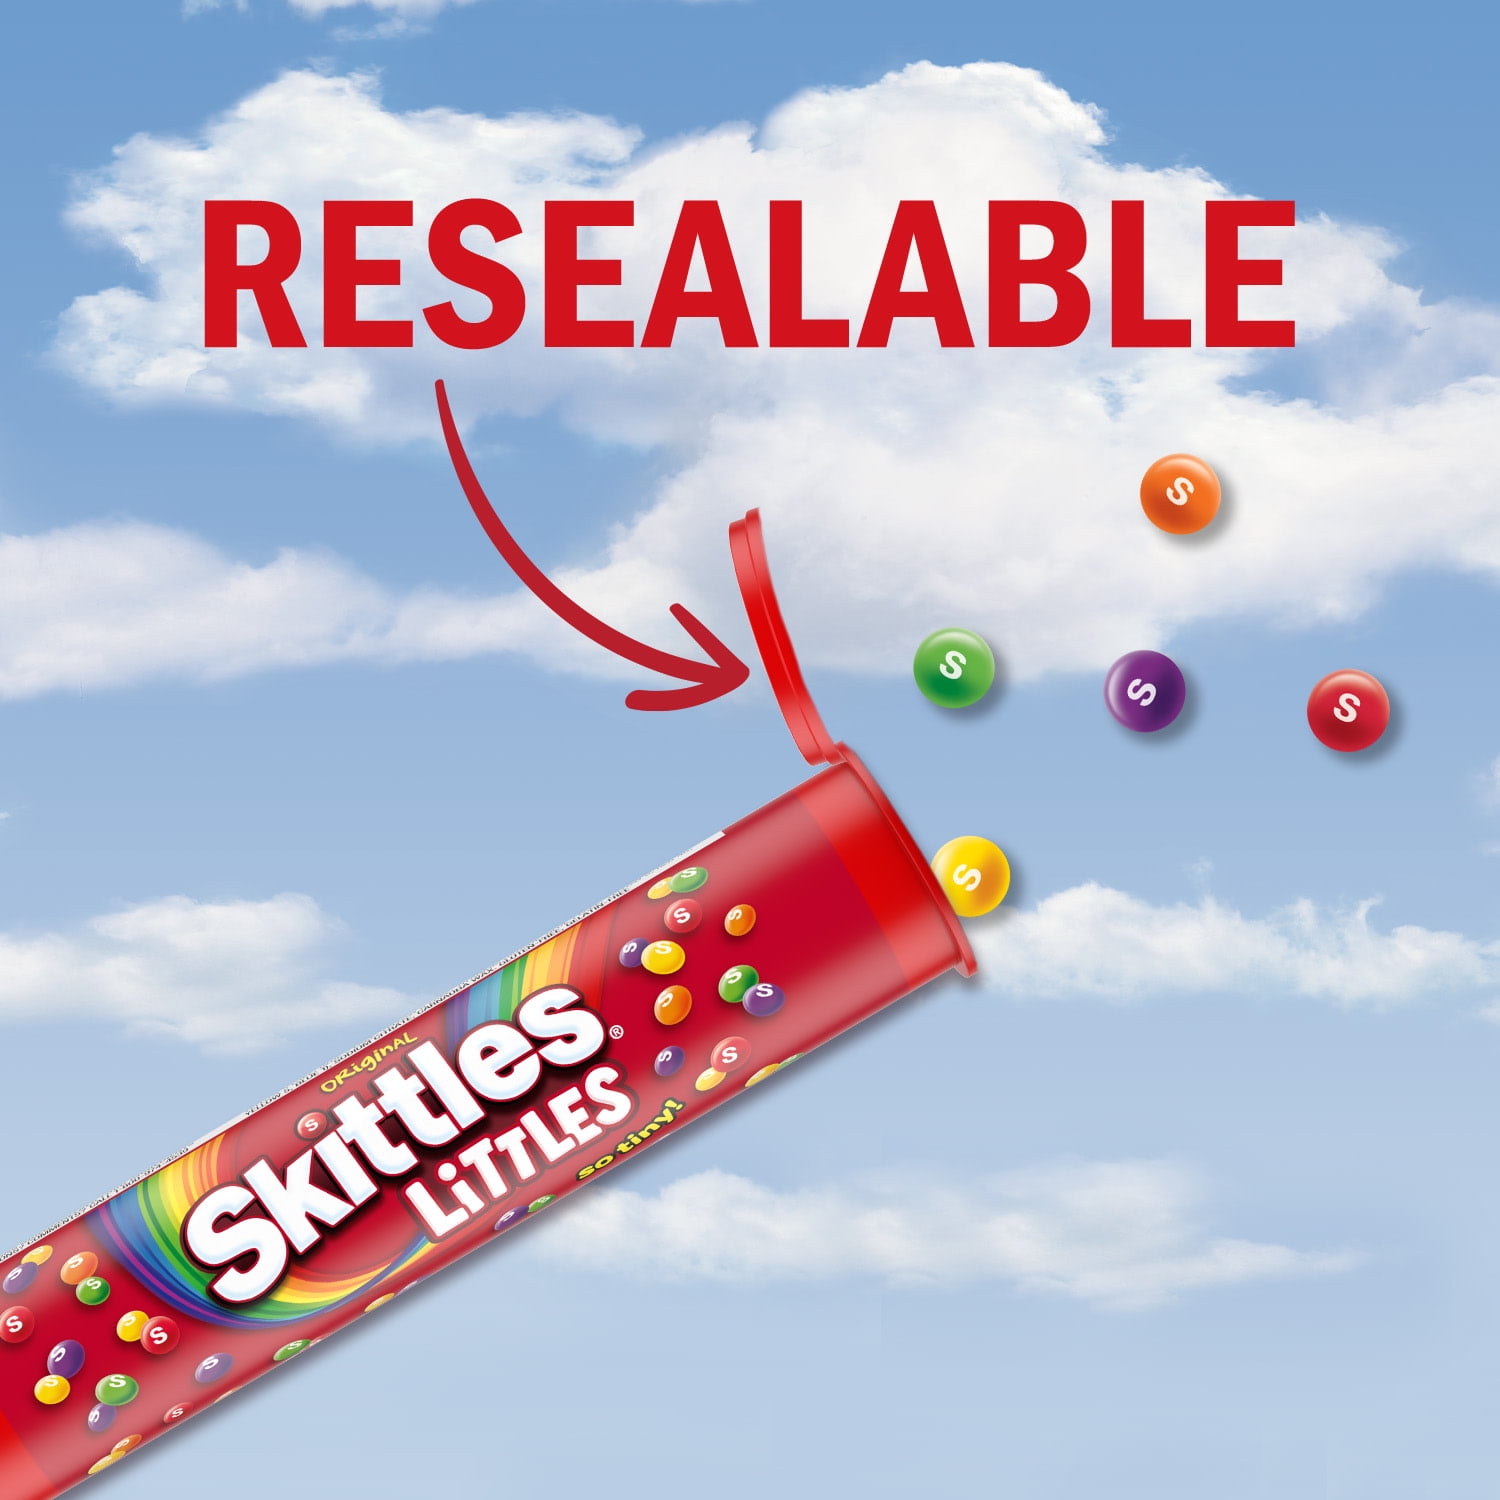 Skittles Littles : r/junkfoodfinds